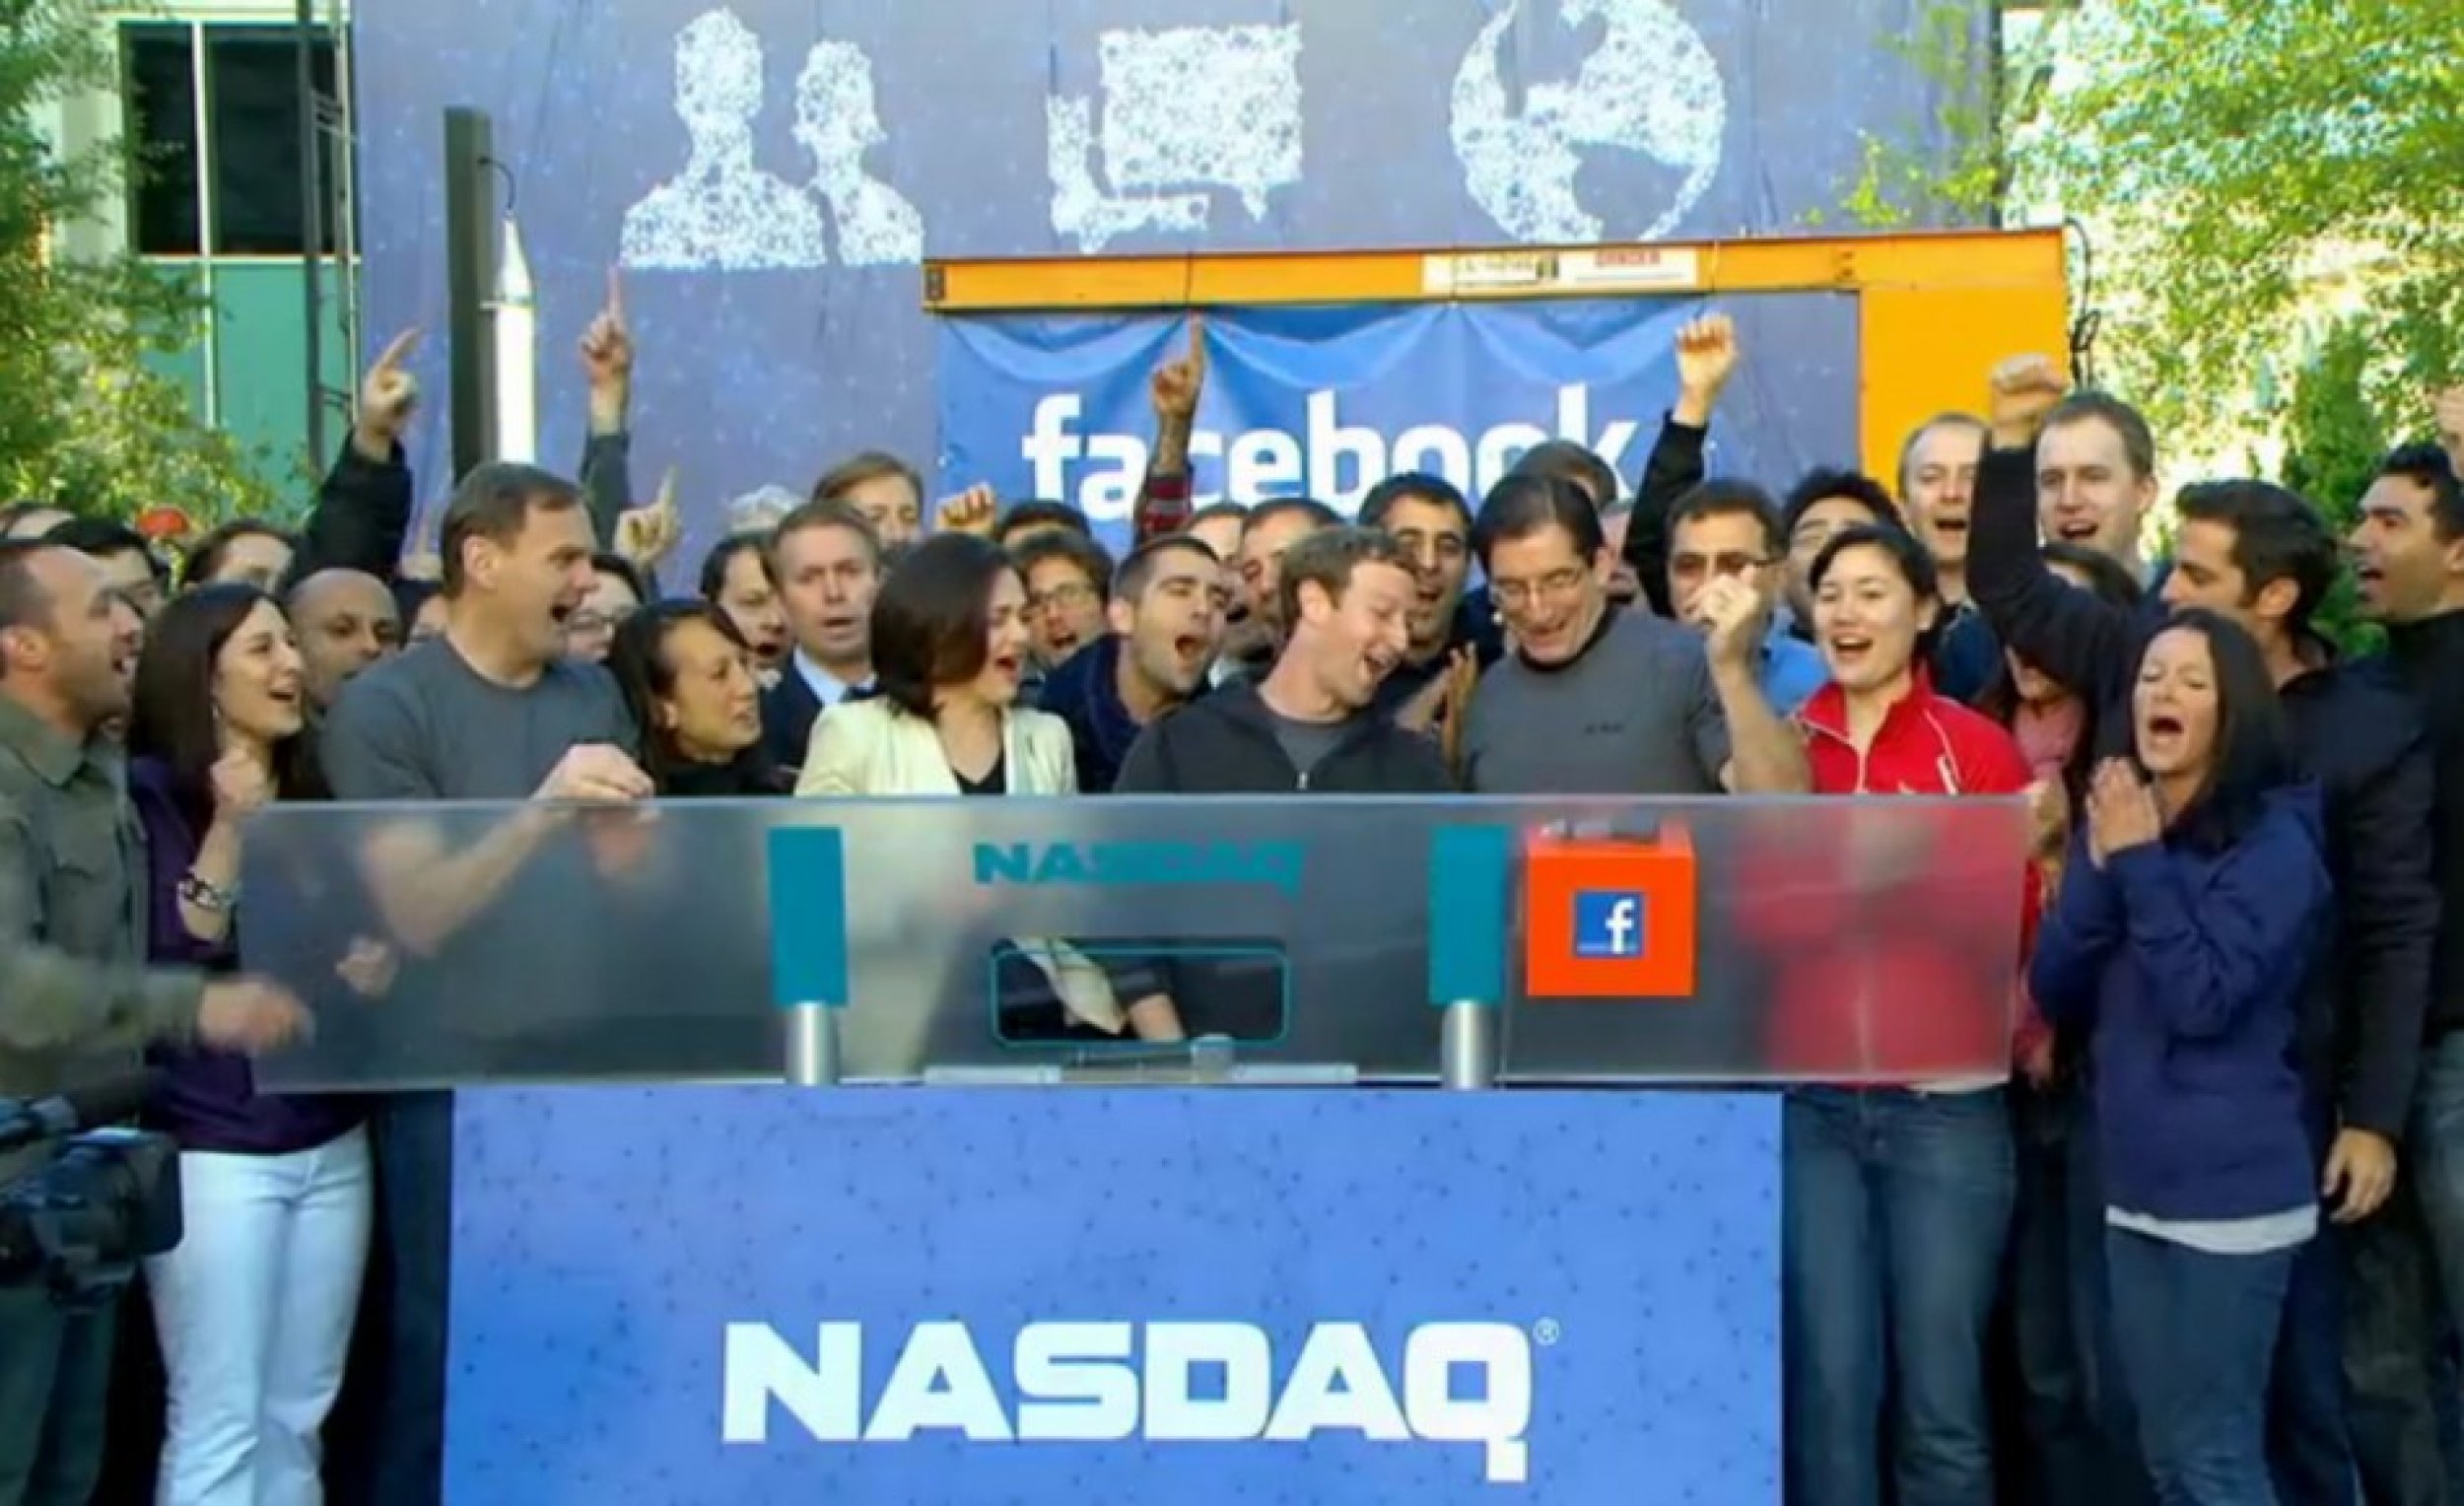 Facebook IPO Mark Zuckerberg Celebrates With Employees As Nasdaq Begins Trading